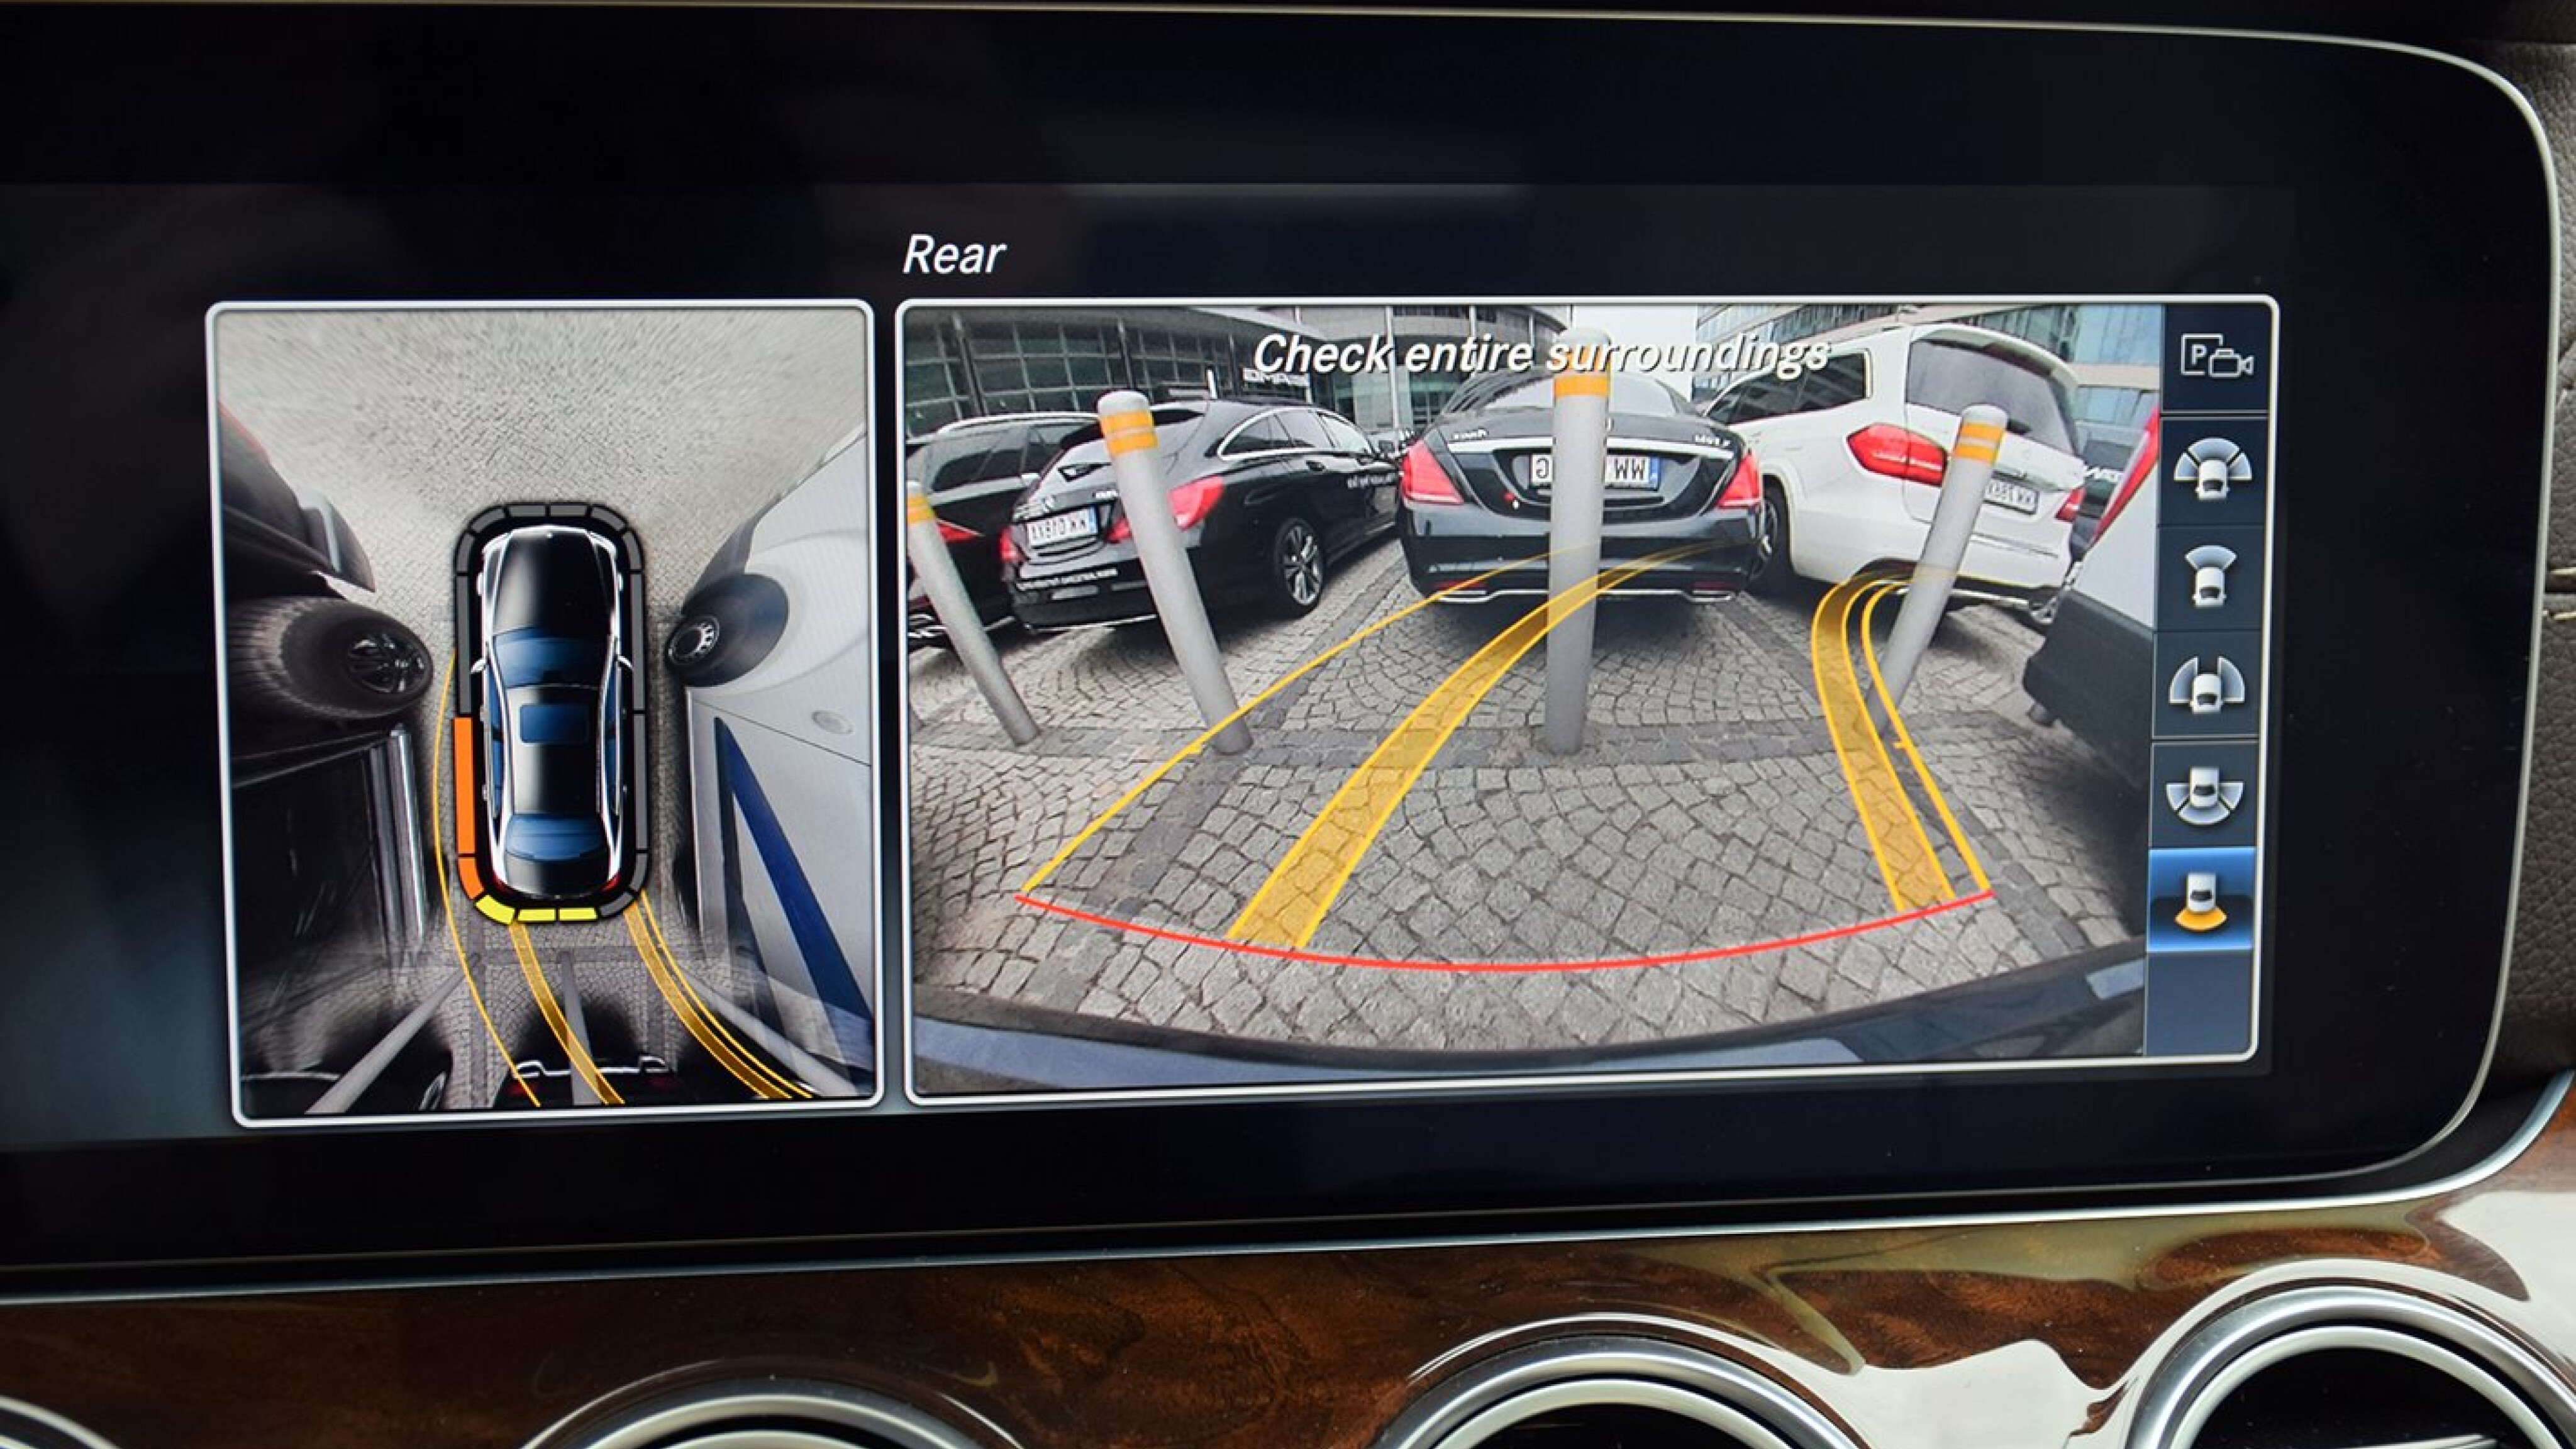 360-degree parking monitors explained